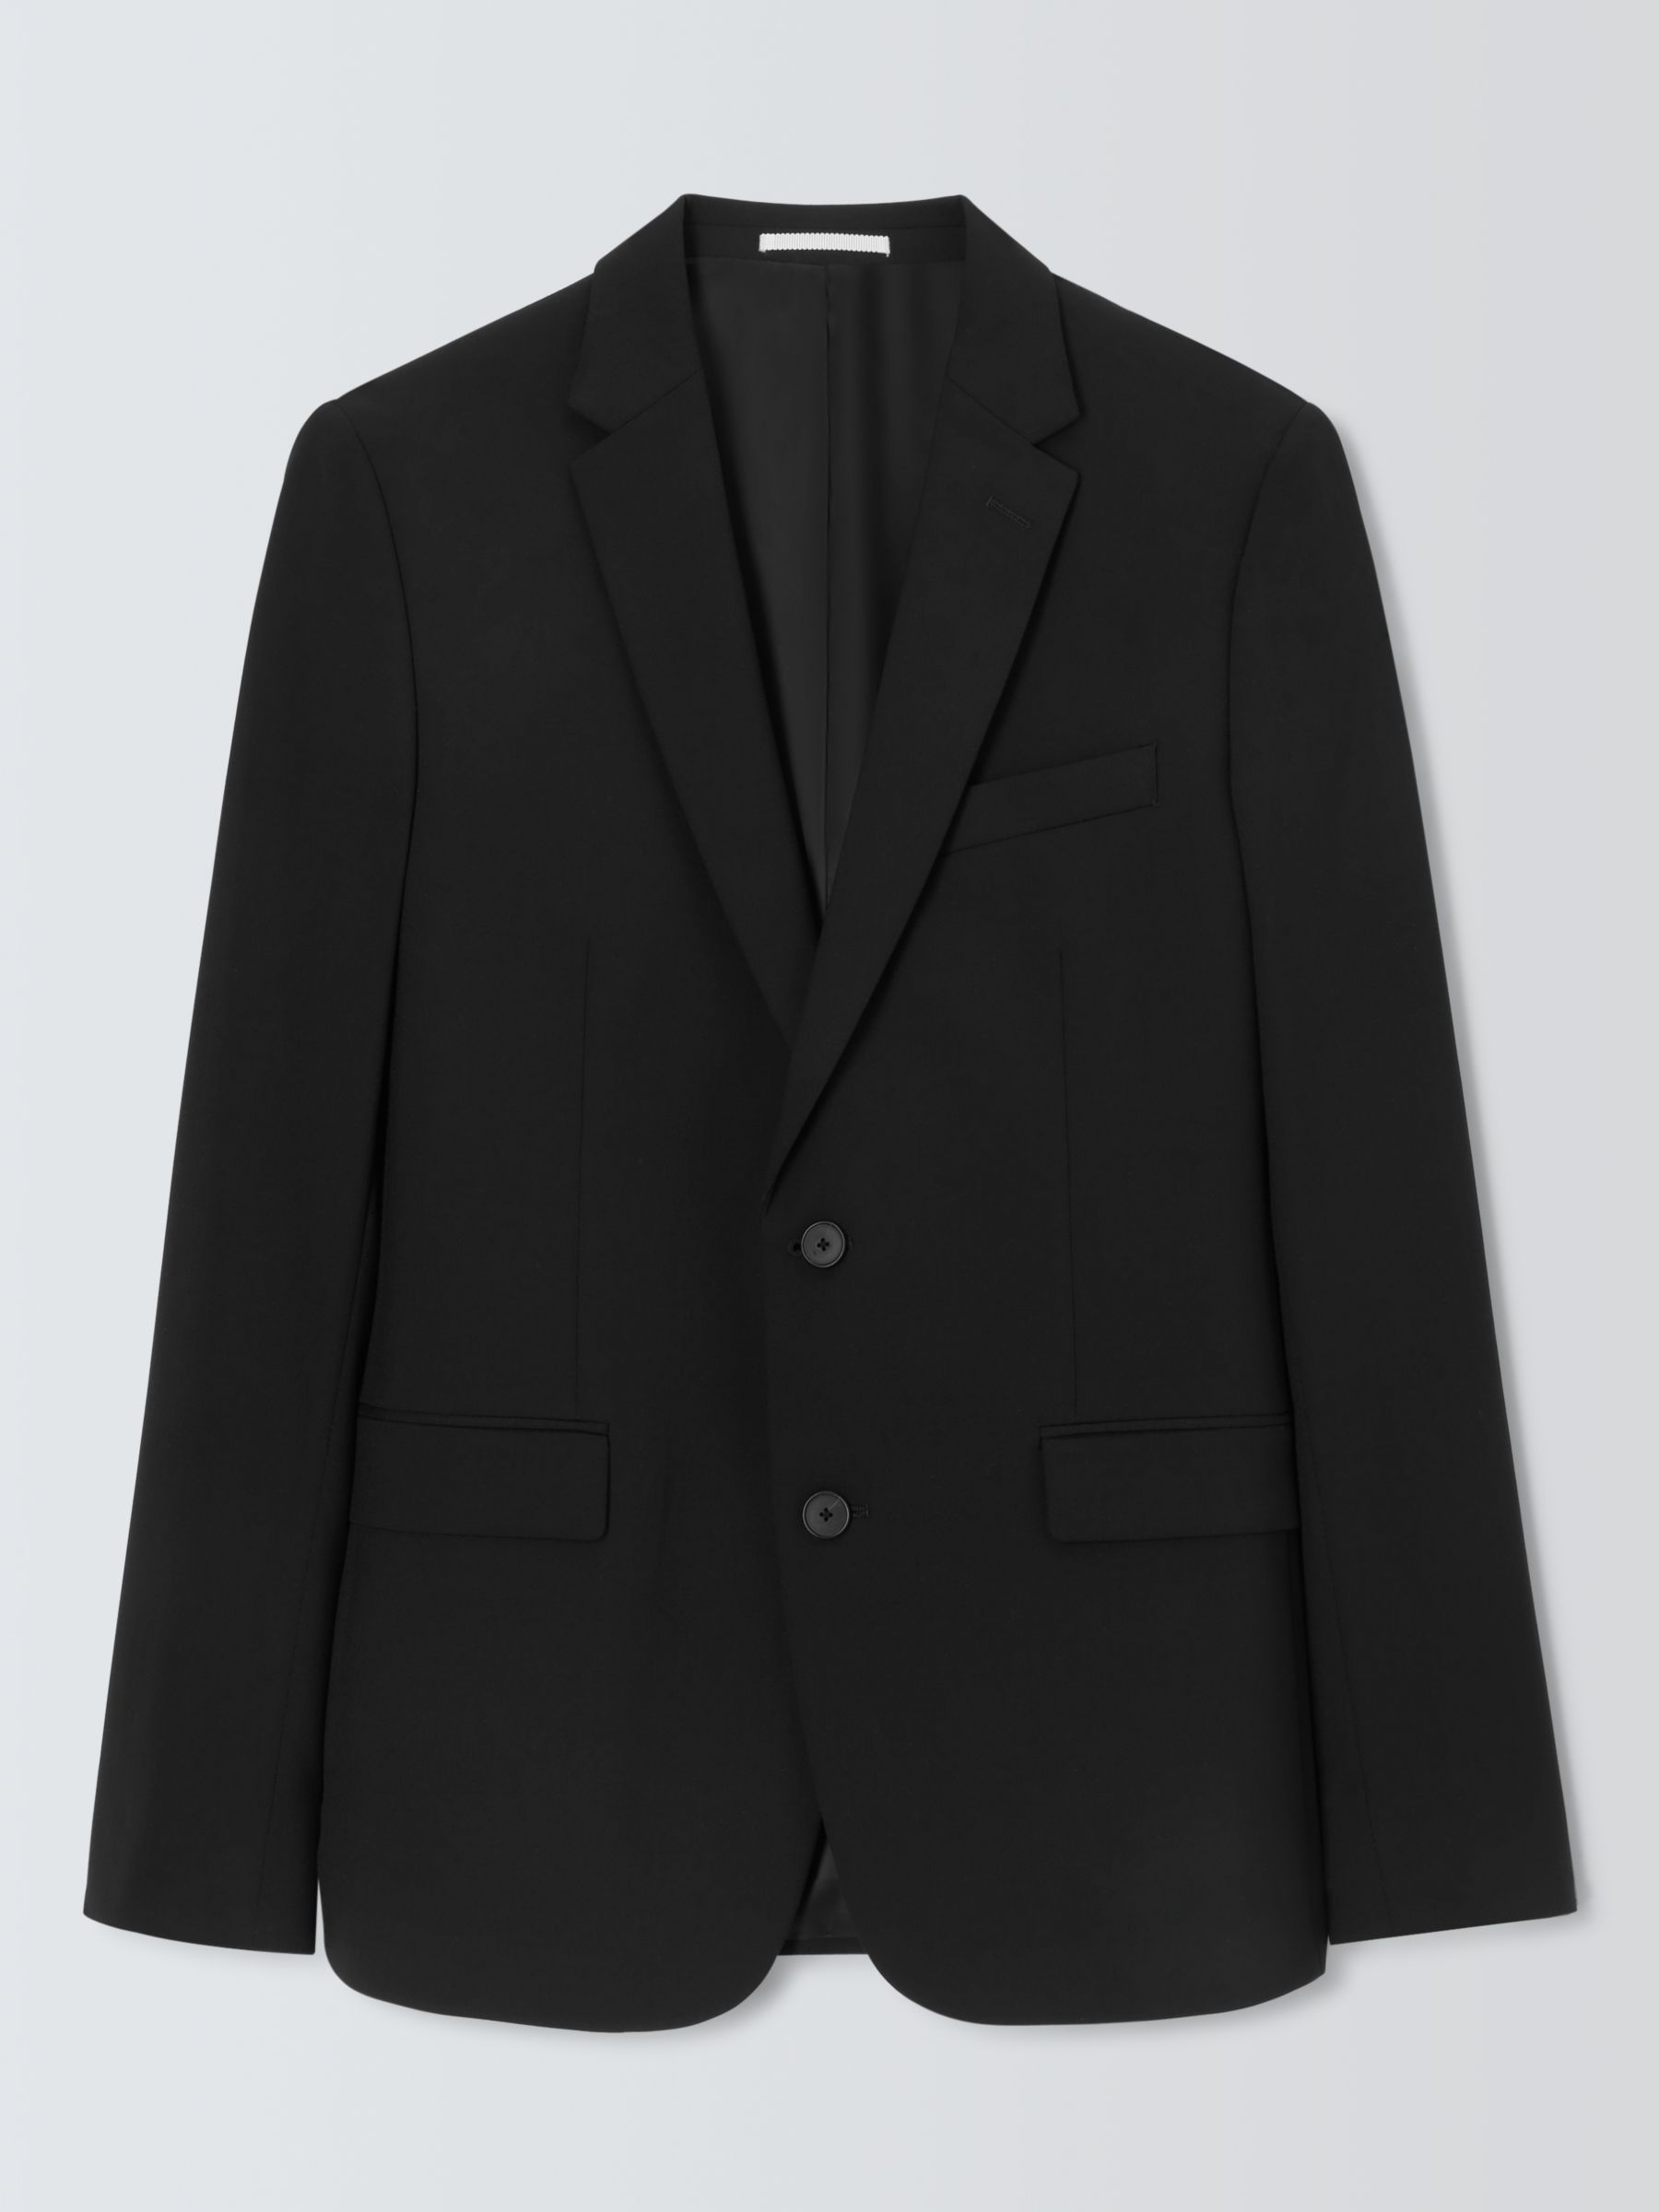 Kin Wool Blend Slim Fit Notch Lapel Suit Jacket, Black at John Lewis ...